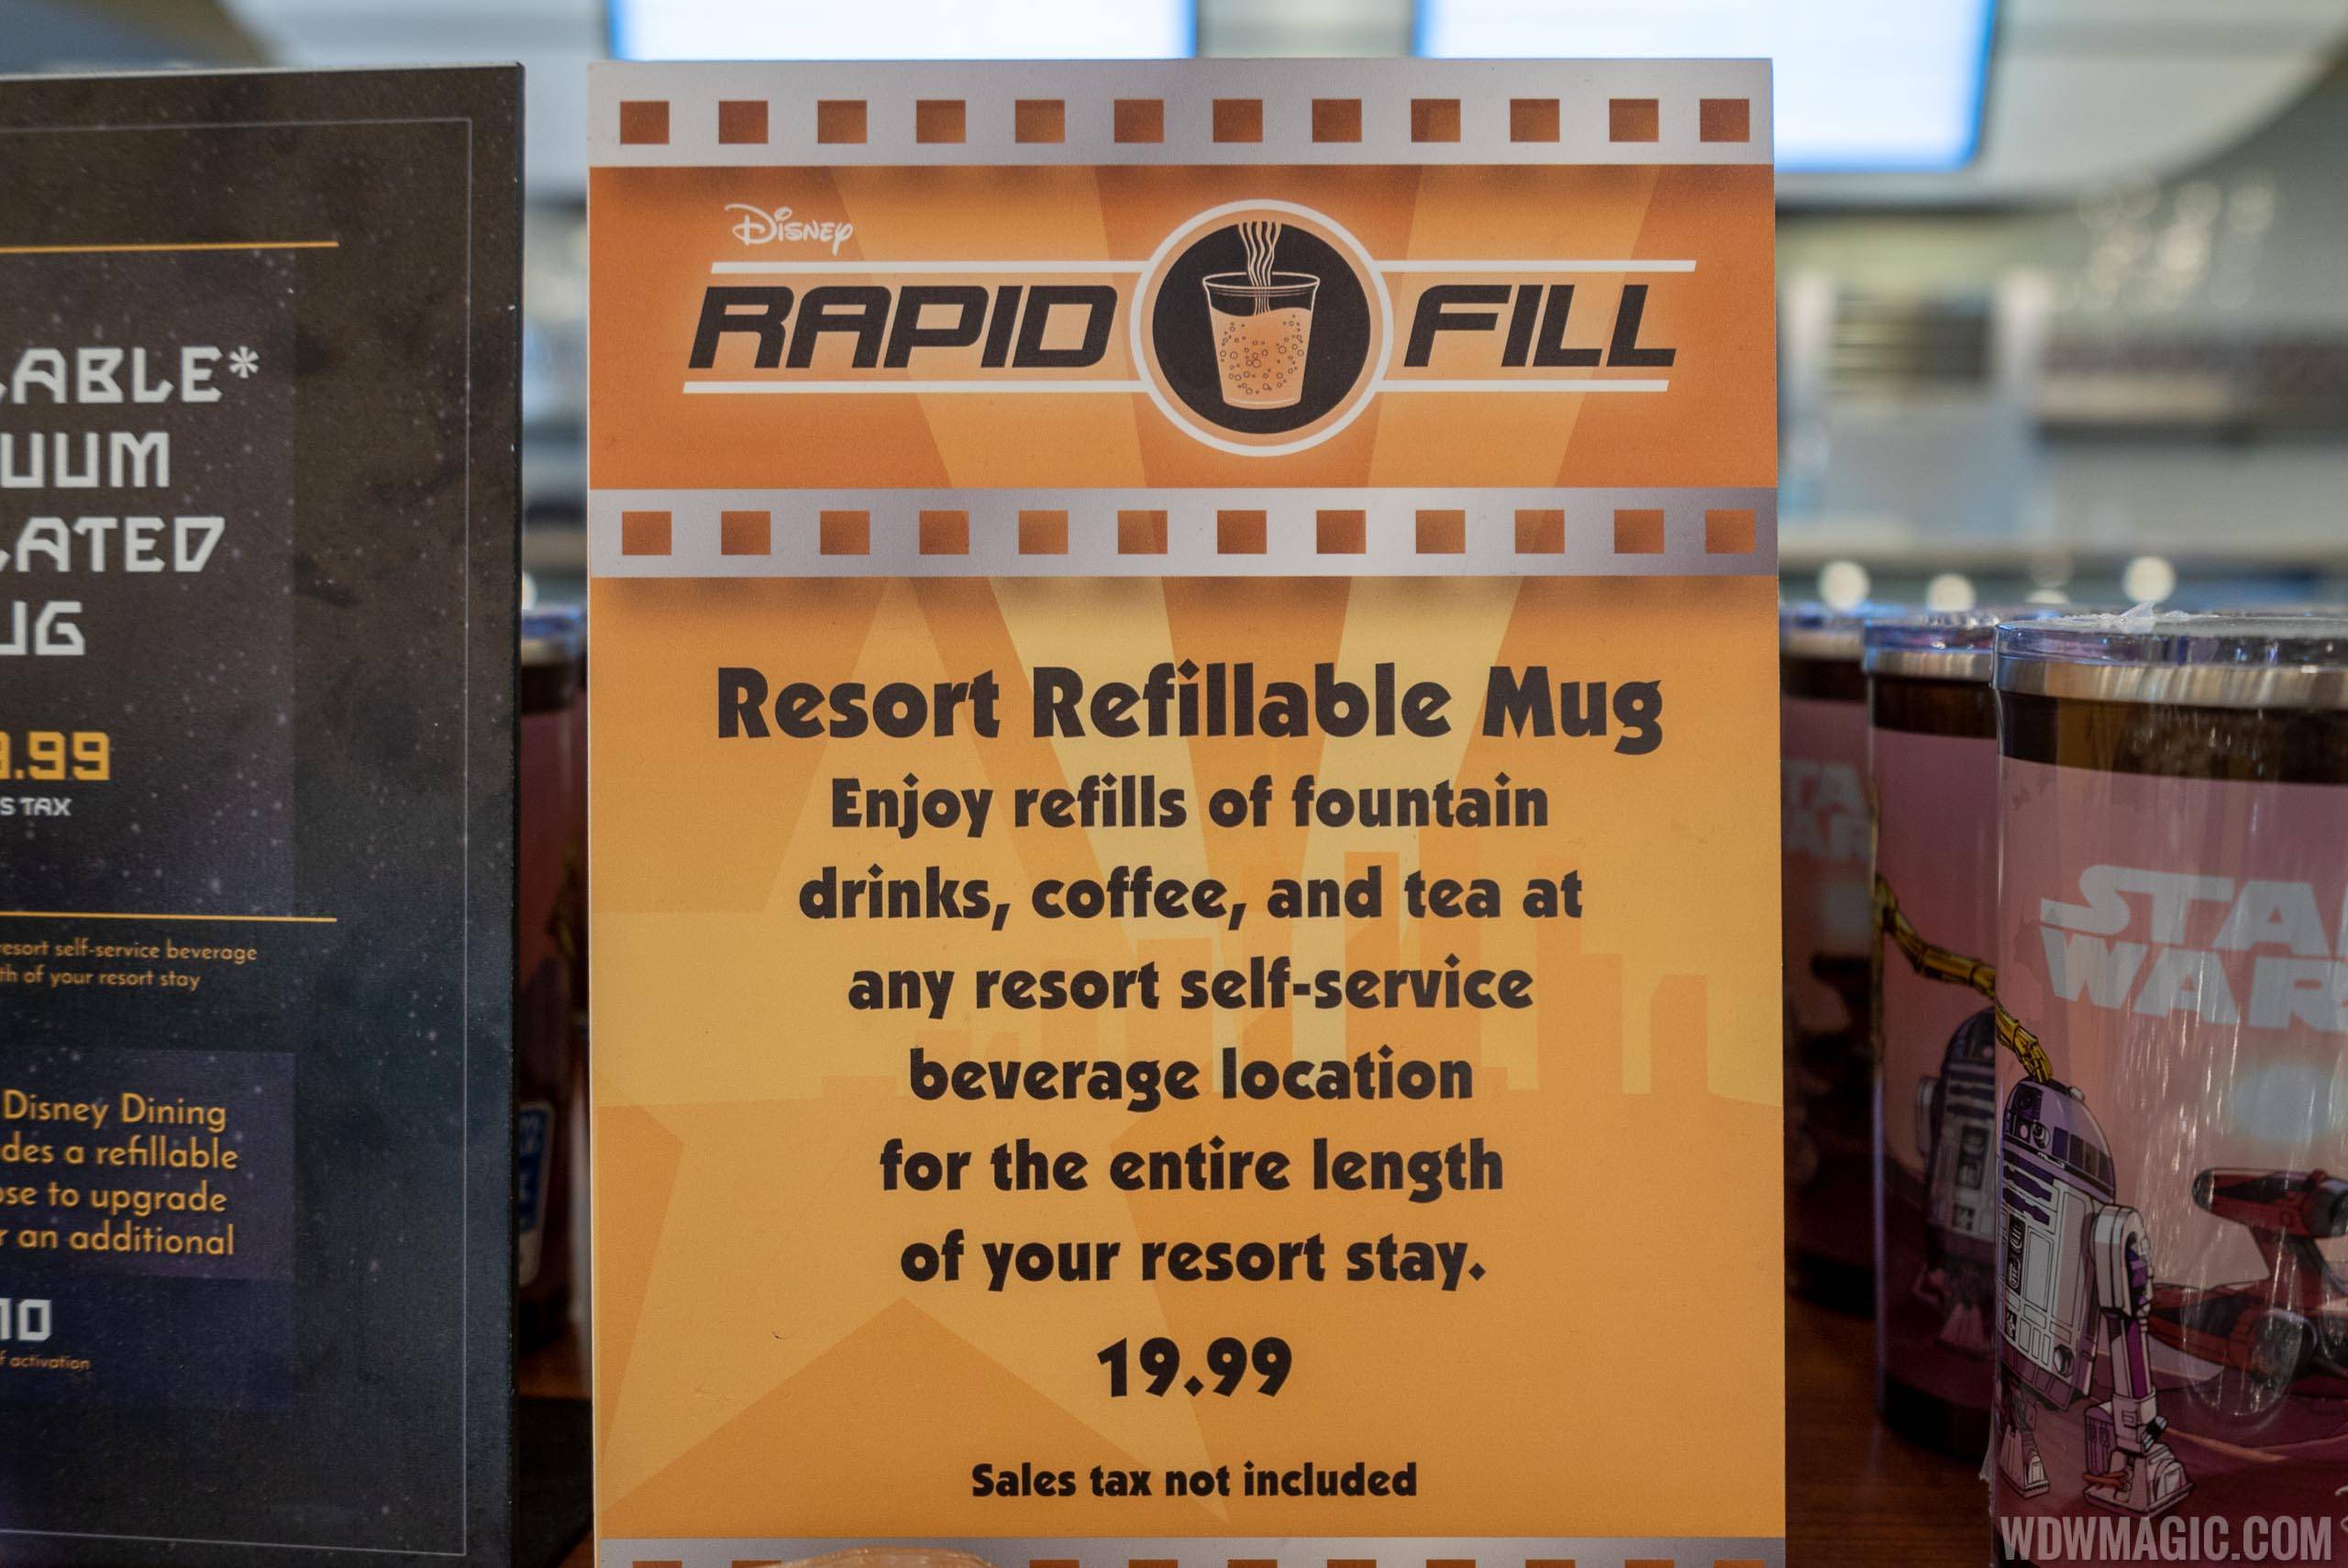 Rapid Fill Refillable Mug 2020